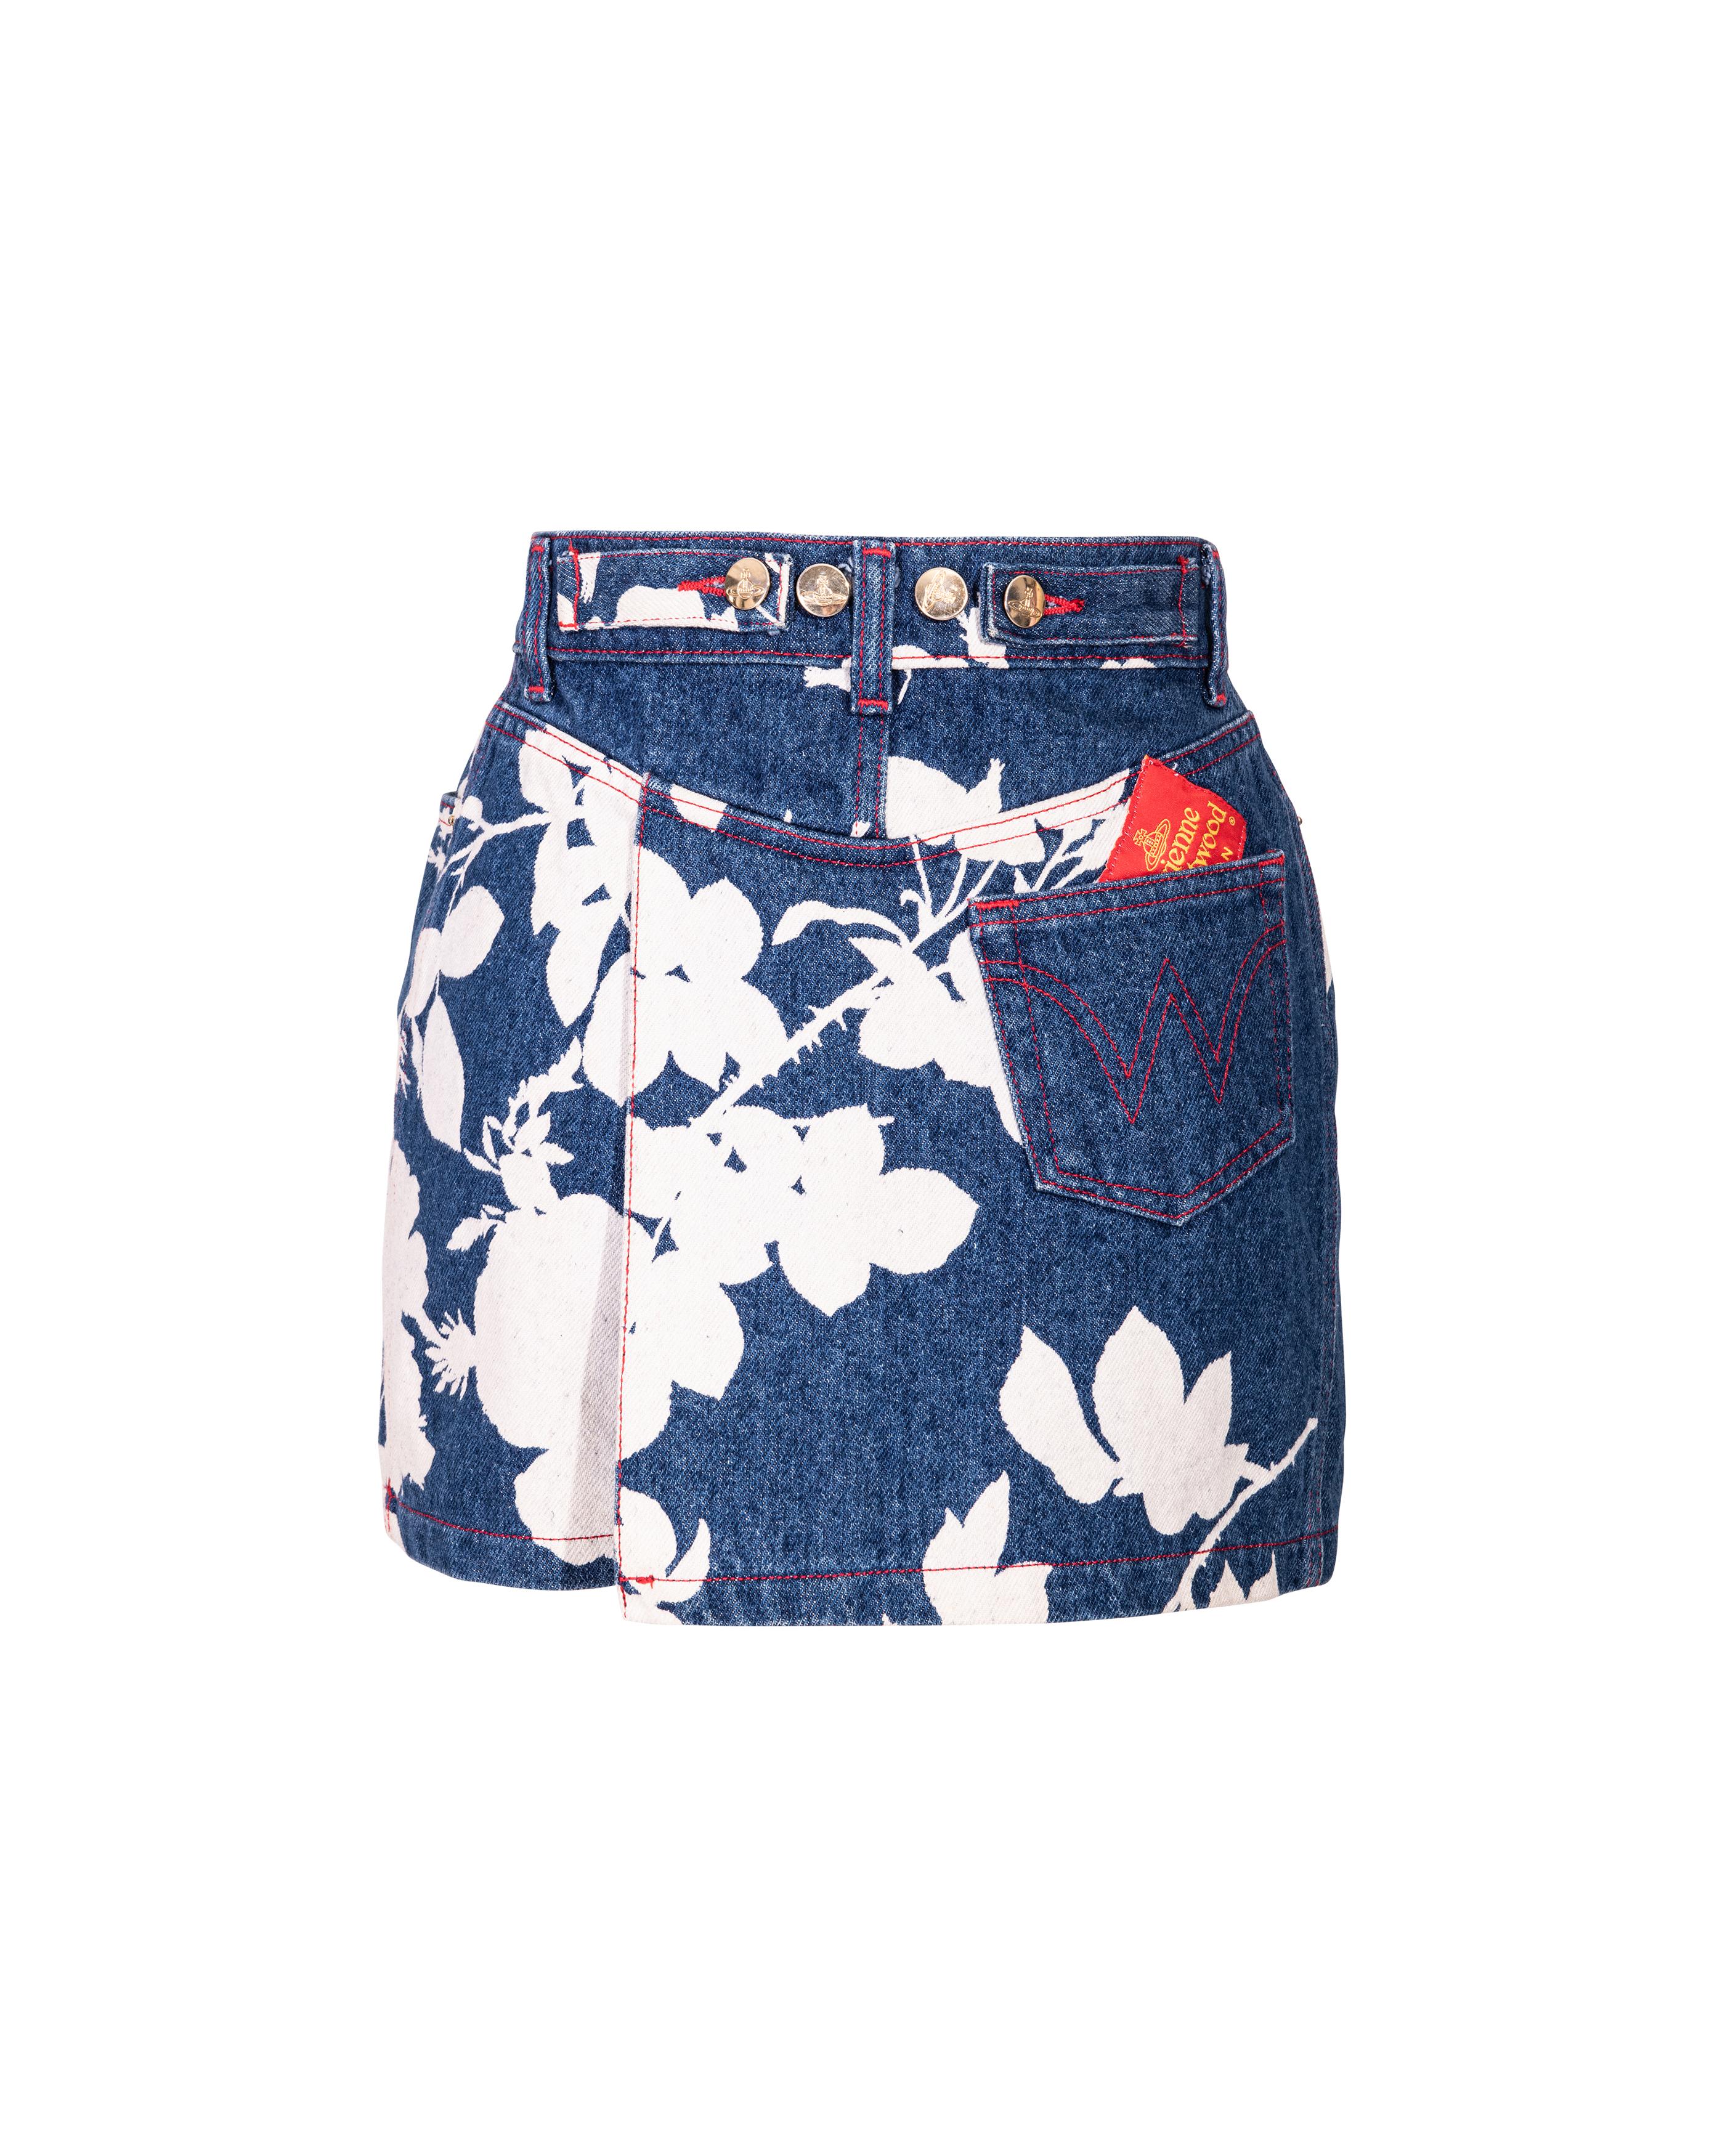 S/S 1994 Vivienne Westwood Denim Skirt Set with Bleached Floral Pattern For Sale 2